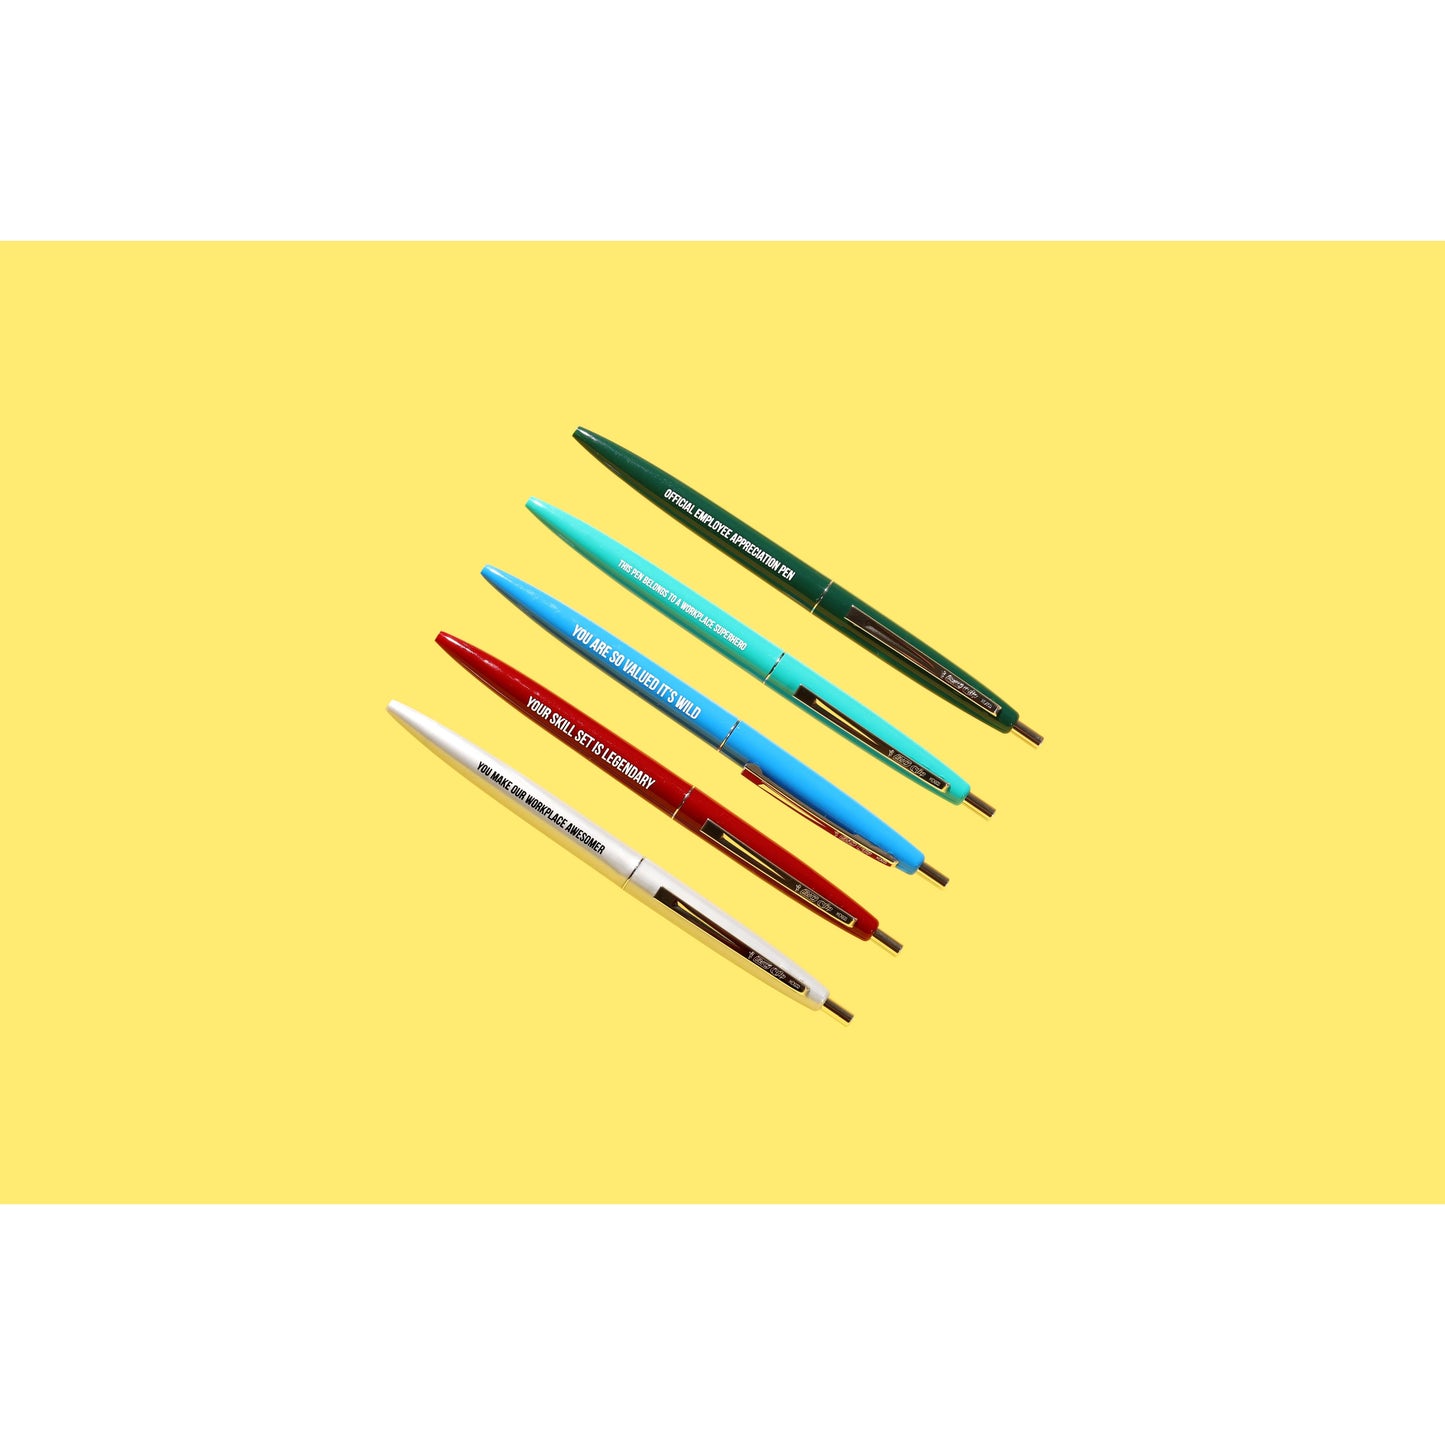 Official Employee Appreciation Pen Set | Set of 5 Motivational Pens | Bulk Discounts, No Code Needed